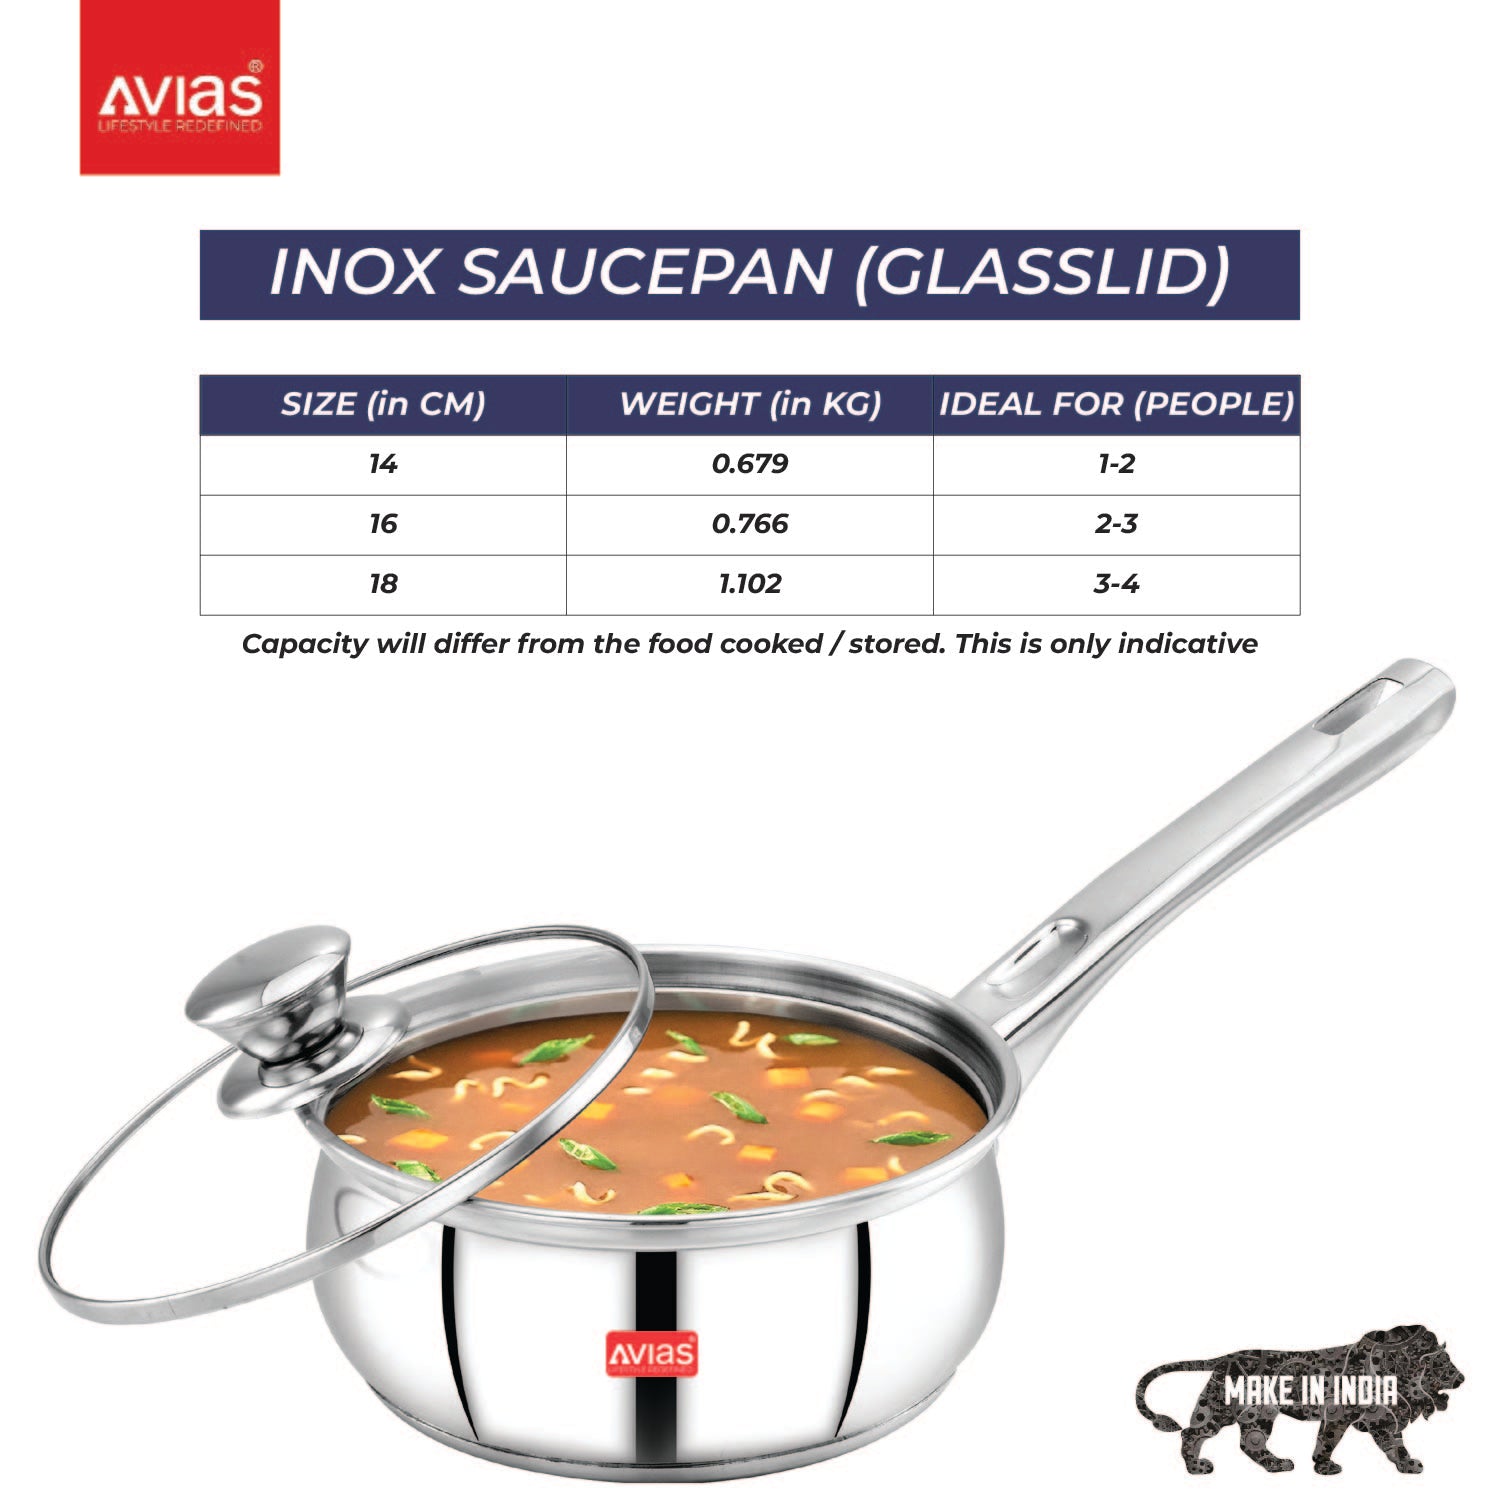 AVIAS Inox IB stainless Steel Saucepan with glass lid